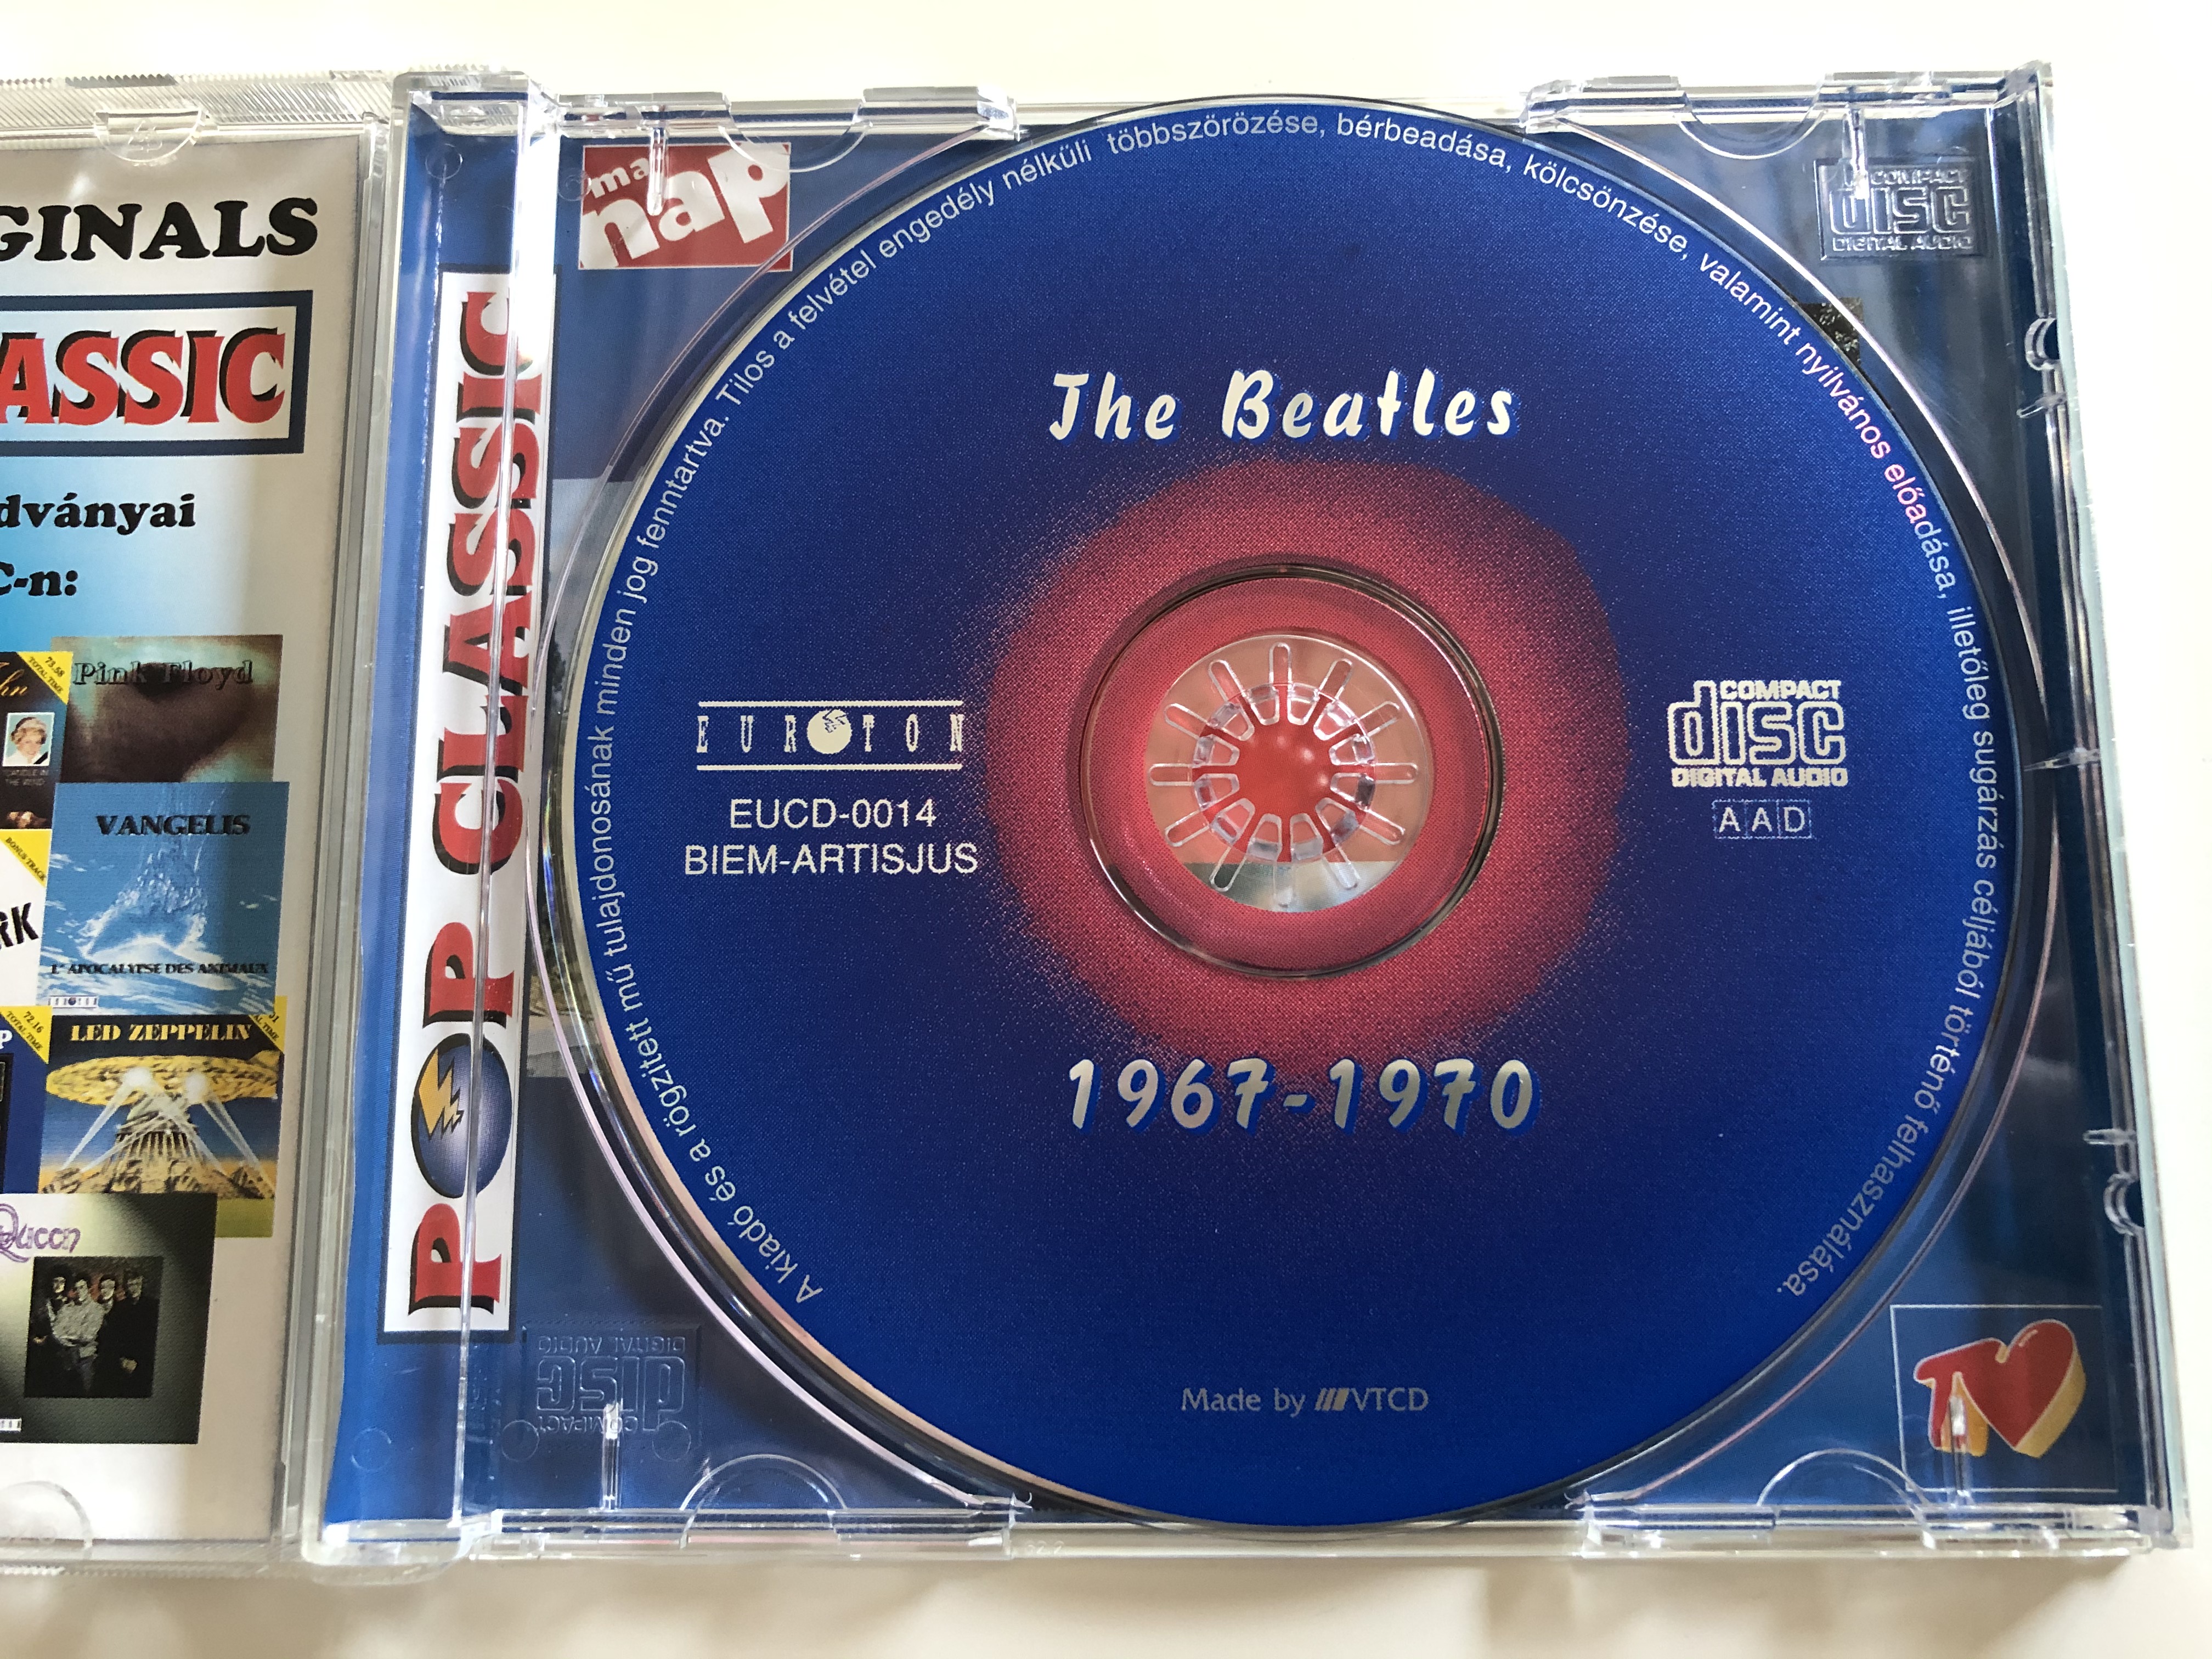 the-beatles-1967-1970-73.16-total-time-pop-classic-euroton-audio-cd-eucd-0014-2-.jpg